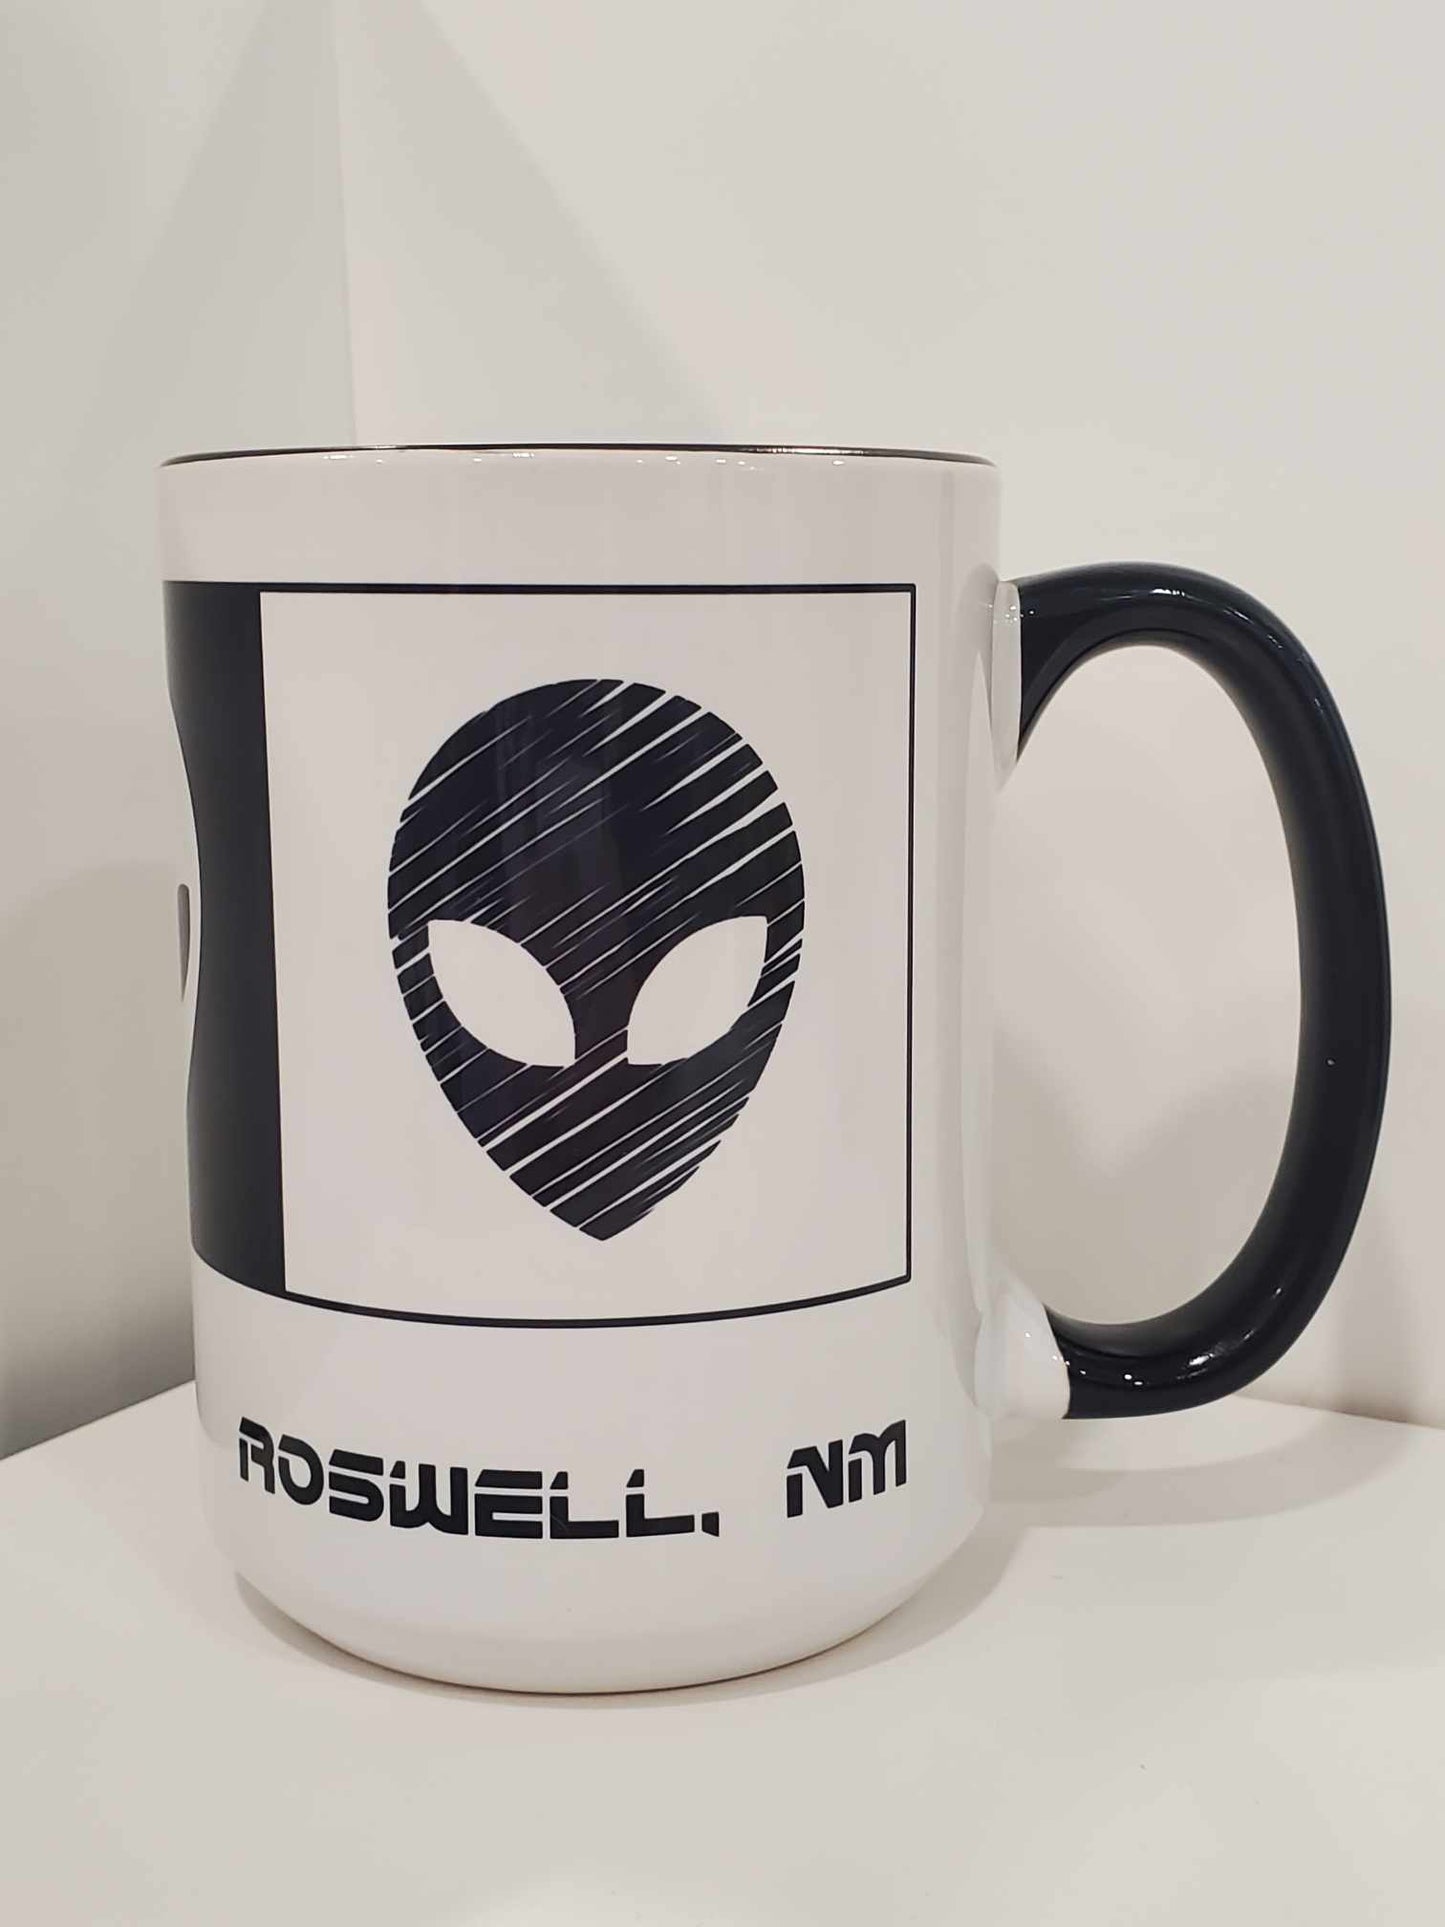 Tri-Alien Roswell, NM 15oz Coffee Mug Black